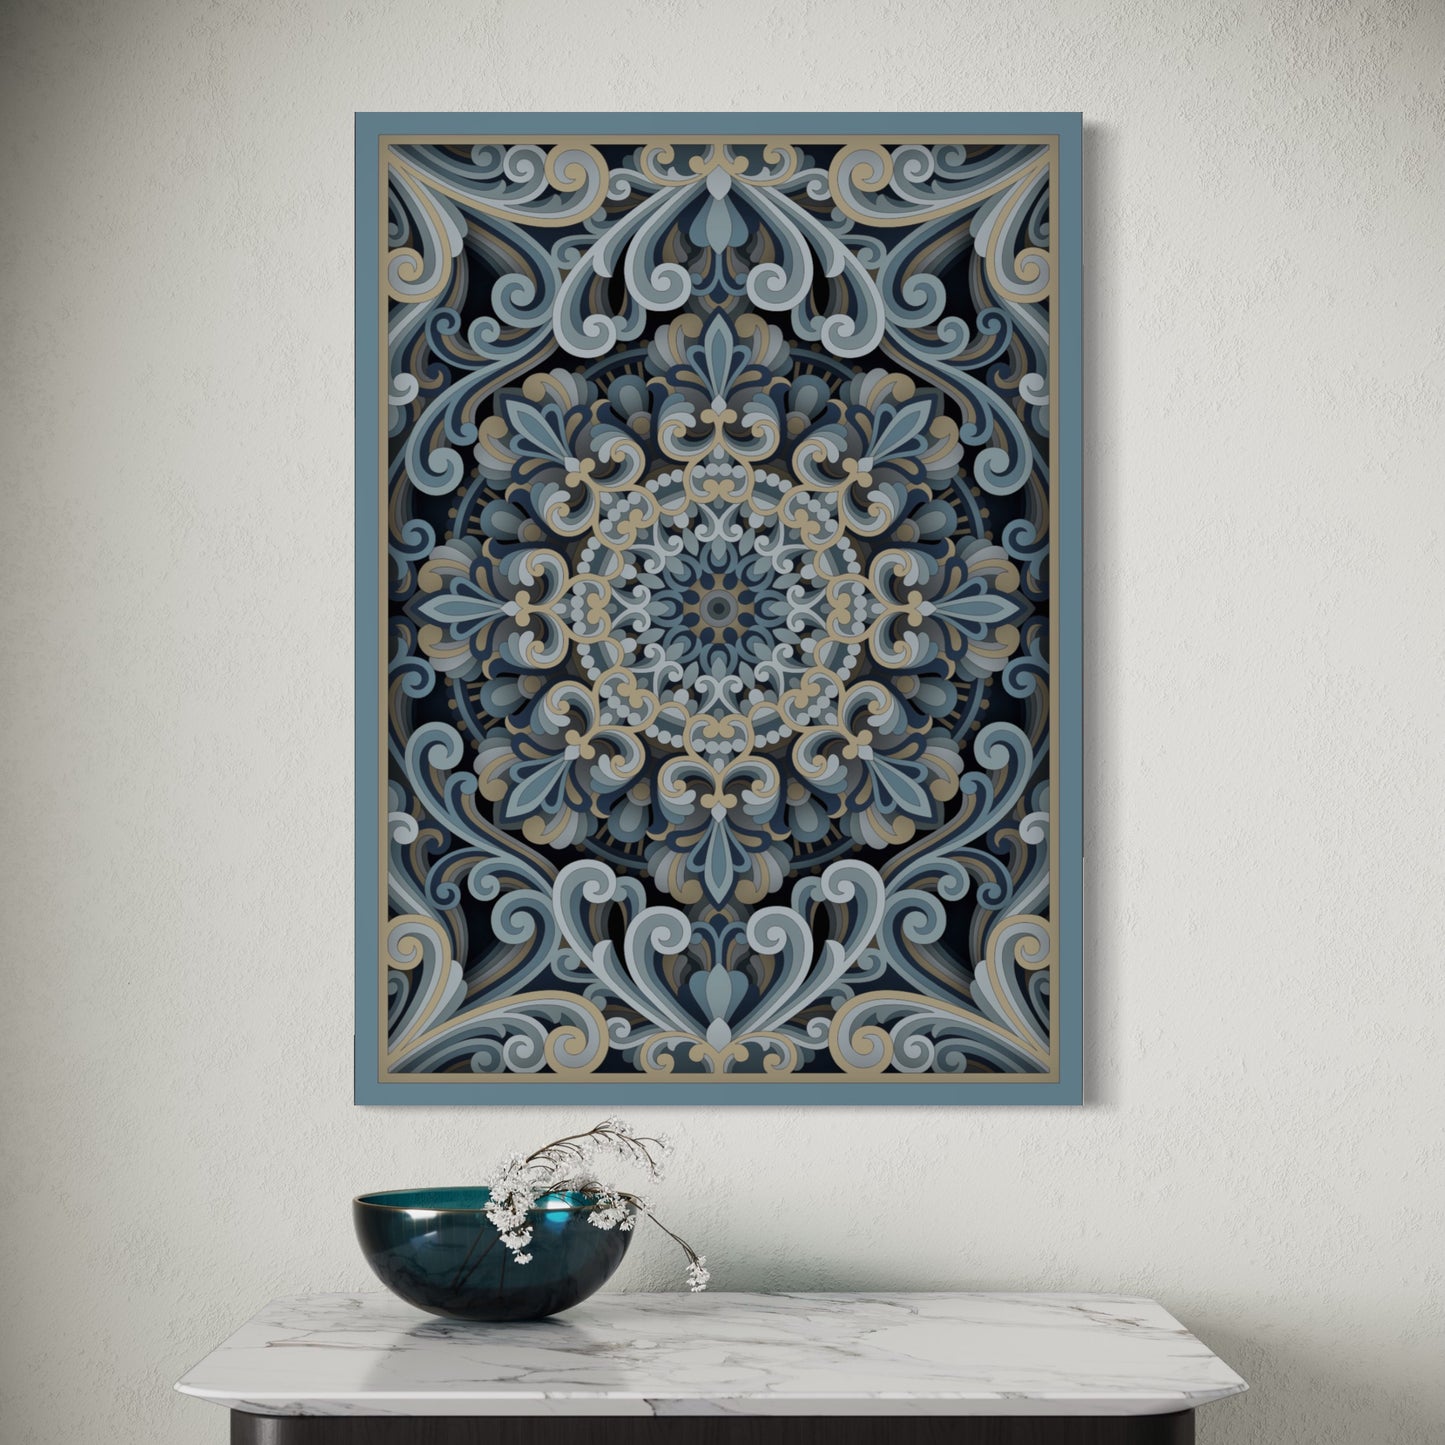 Nebula Wooden Wall Art | 22 x 30 Inch | Color Blue Grey, Bright Grey, Oslo Grey, Hit Grey And Donkey Brown